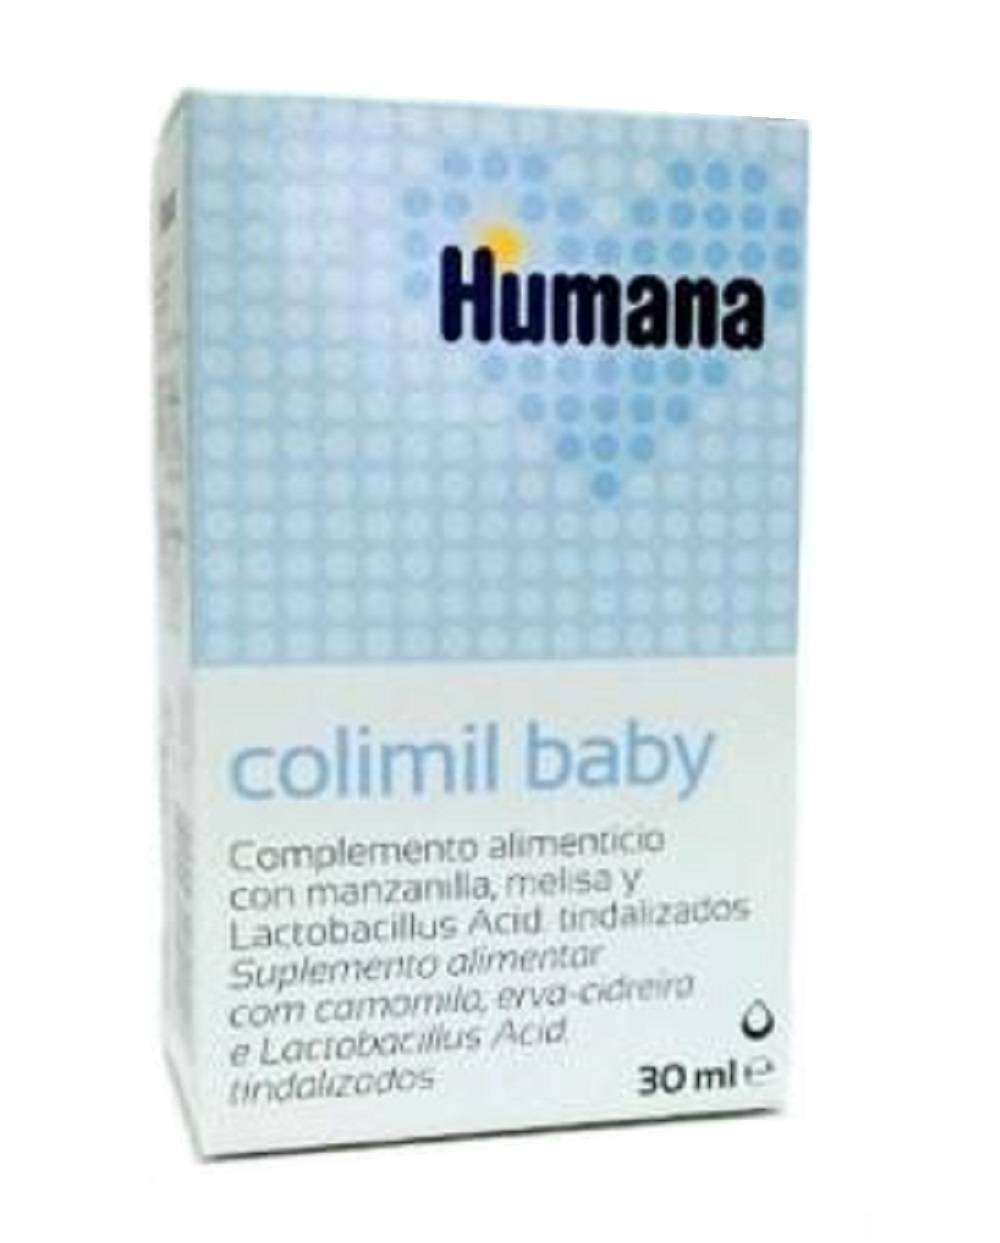 COLIMIL BABY 30ML - HUMANA - Mamá y Bebé